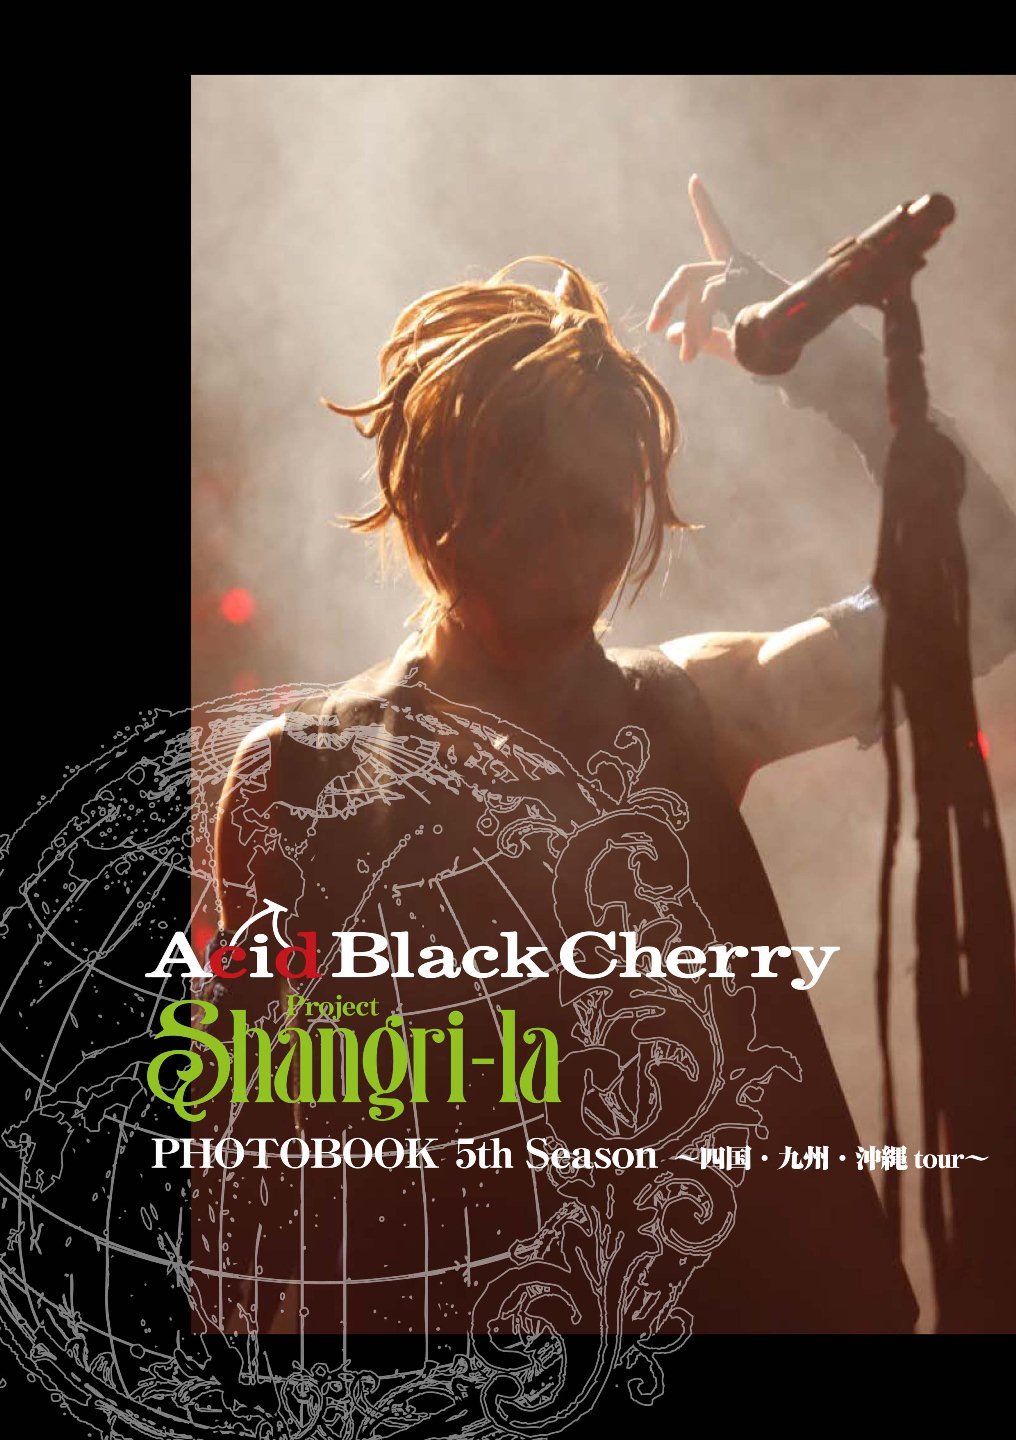 Acid Black Cherry ( アシッドブラックチェリー )  の 書籍 Project Shangri-la PHOTOBOOK 5th Season ～四国・九州・沖縄tour～ 通常版